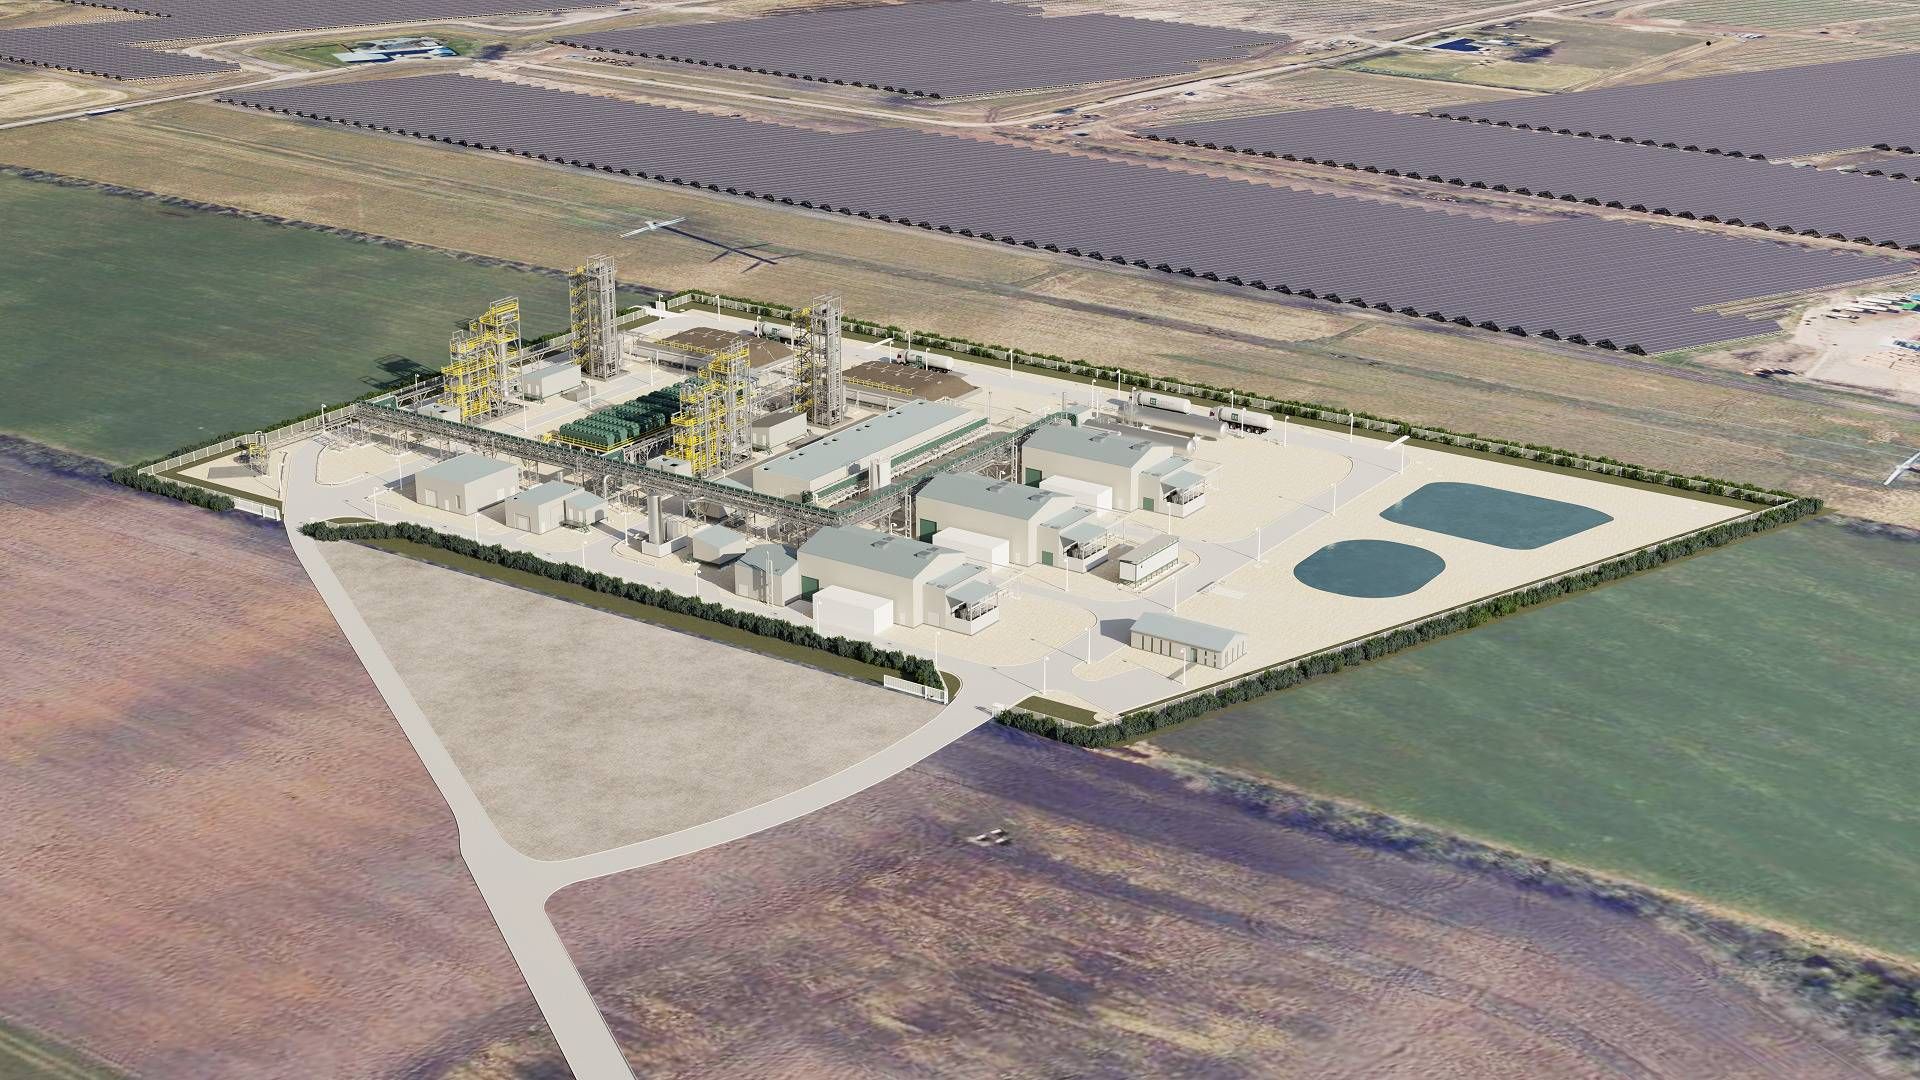 A visual aid for European Energy's methanol plant in Kassø | Photo: European Energy/pr.